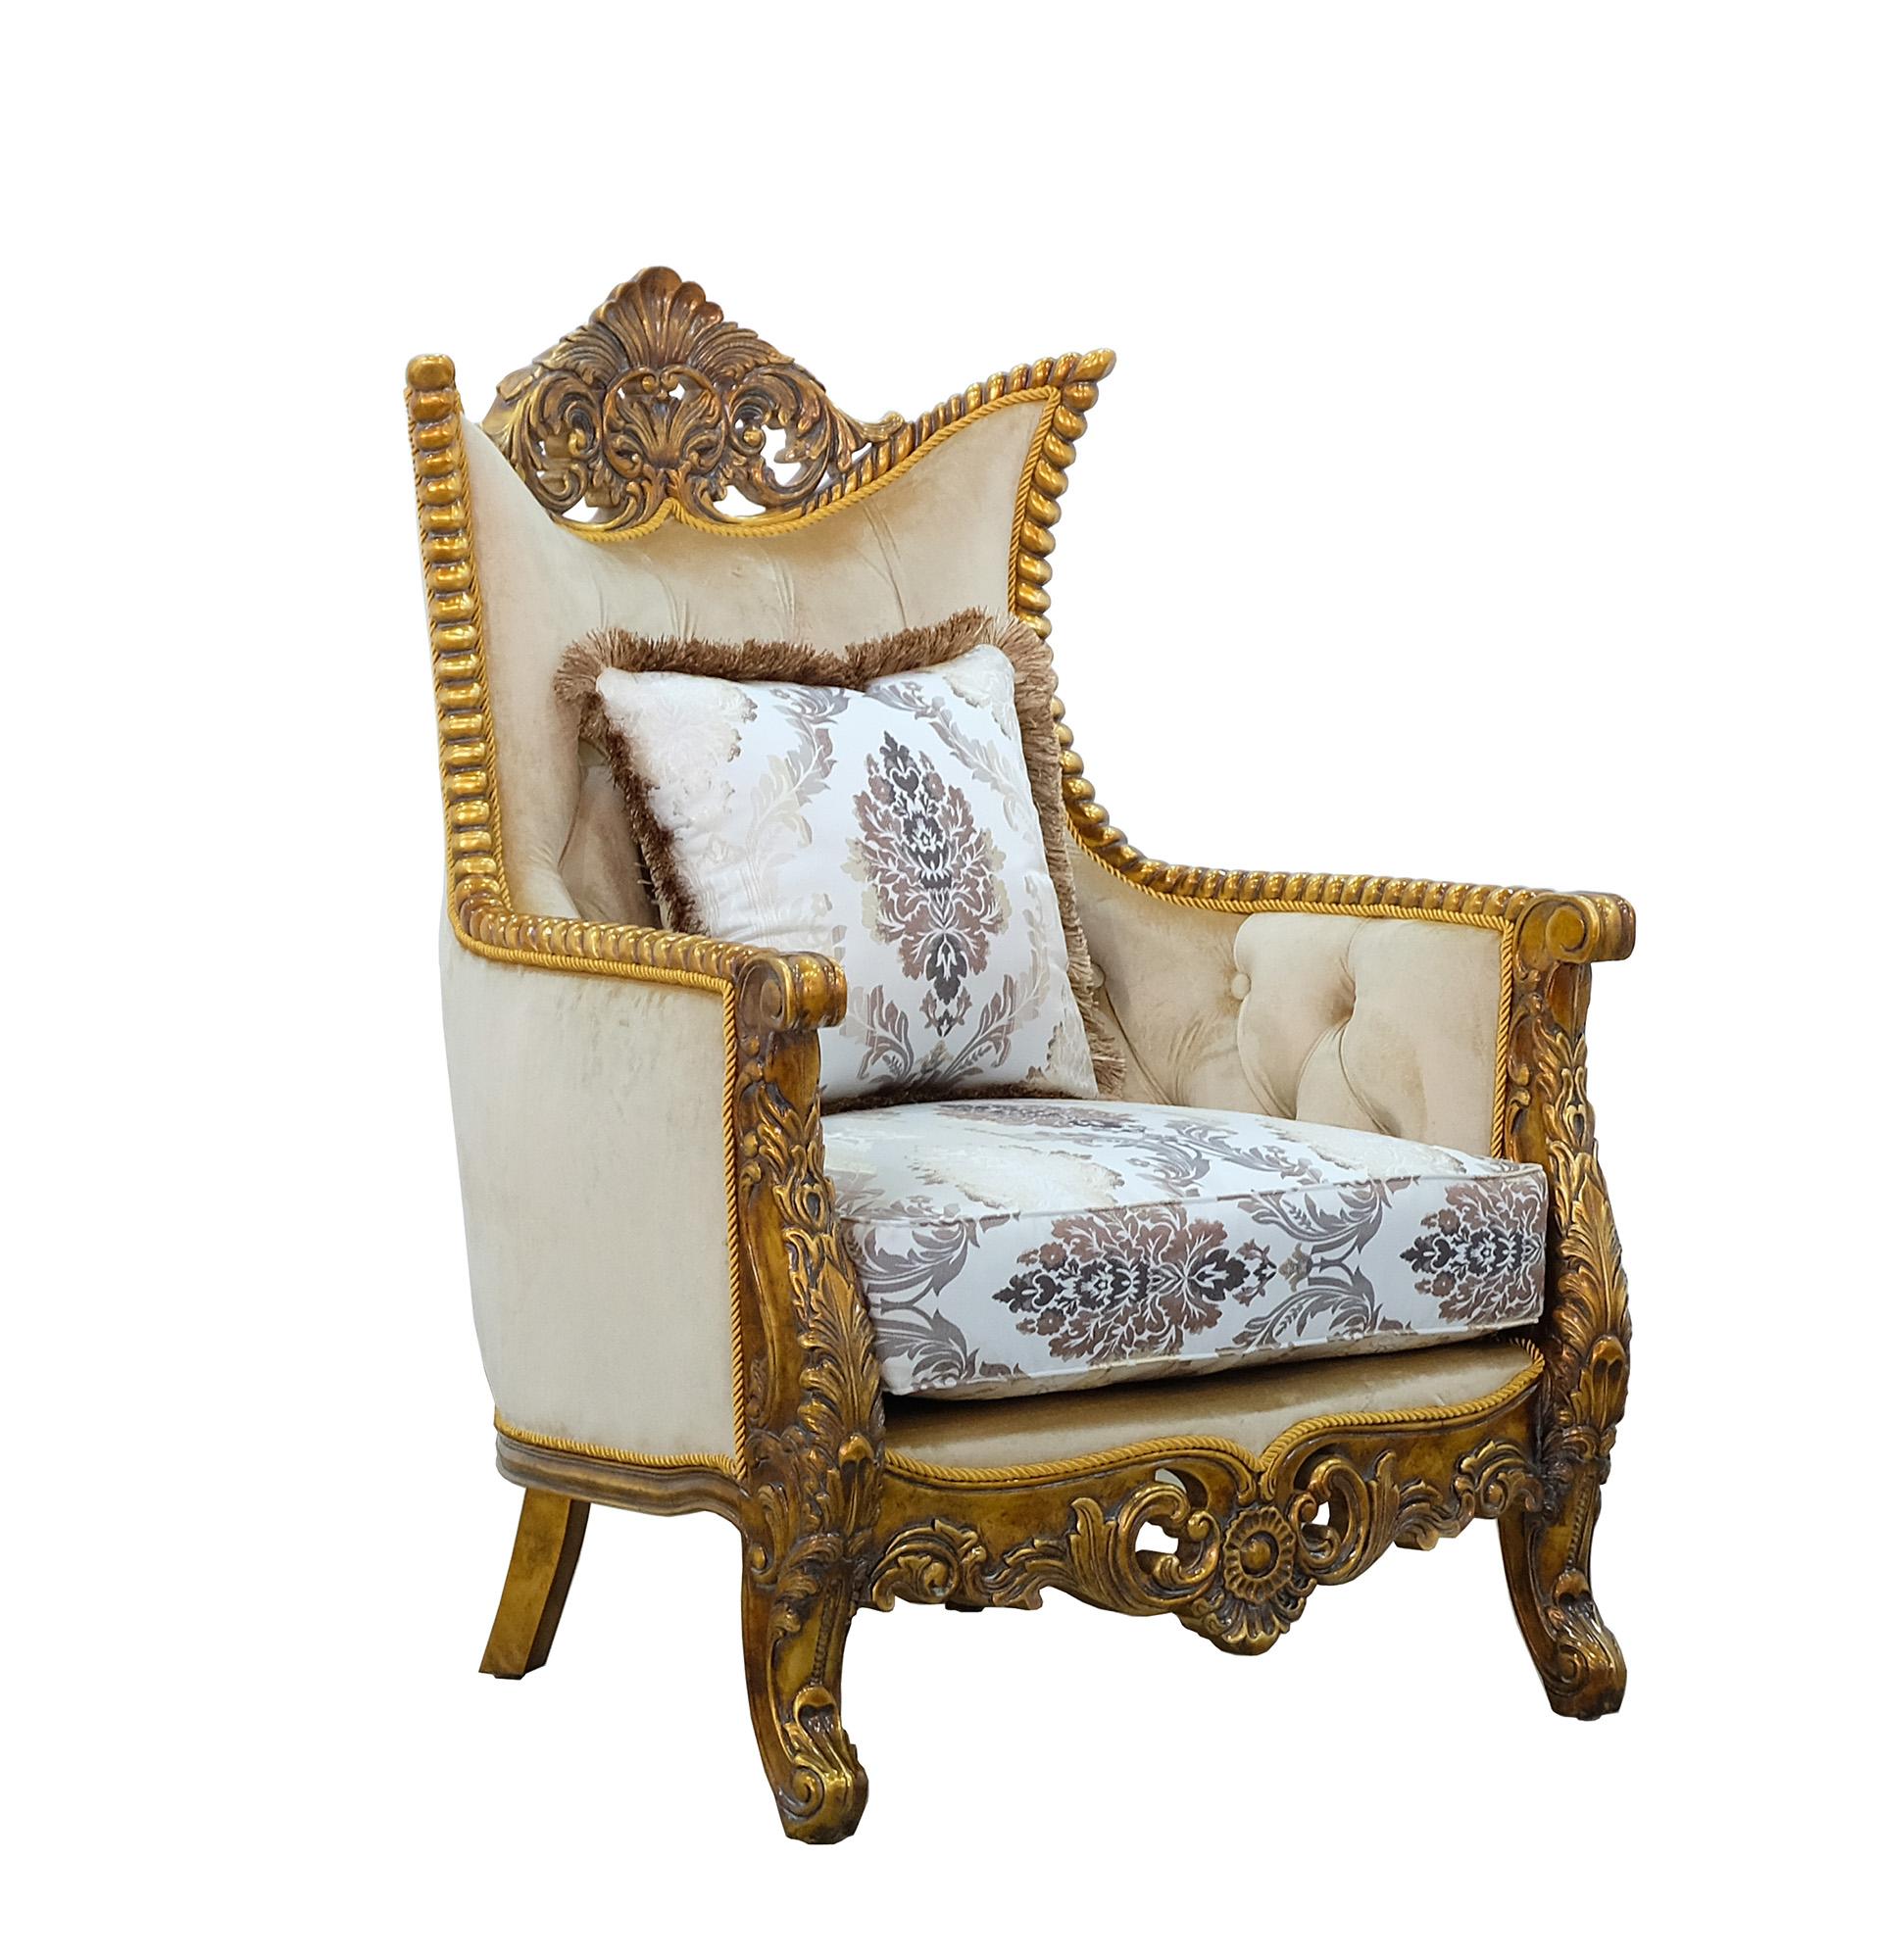 Classic, Traditional Arm Chair MAGGIOLINI 31054-C in Antique, Bronze, Beige Fabric